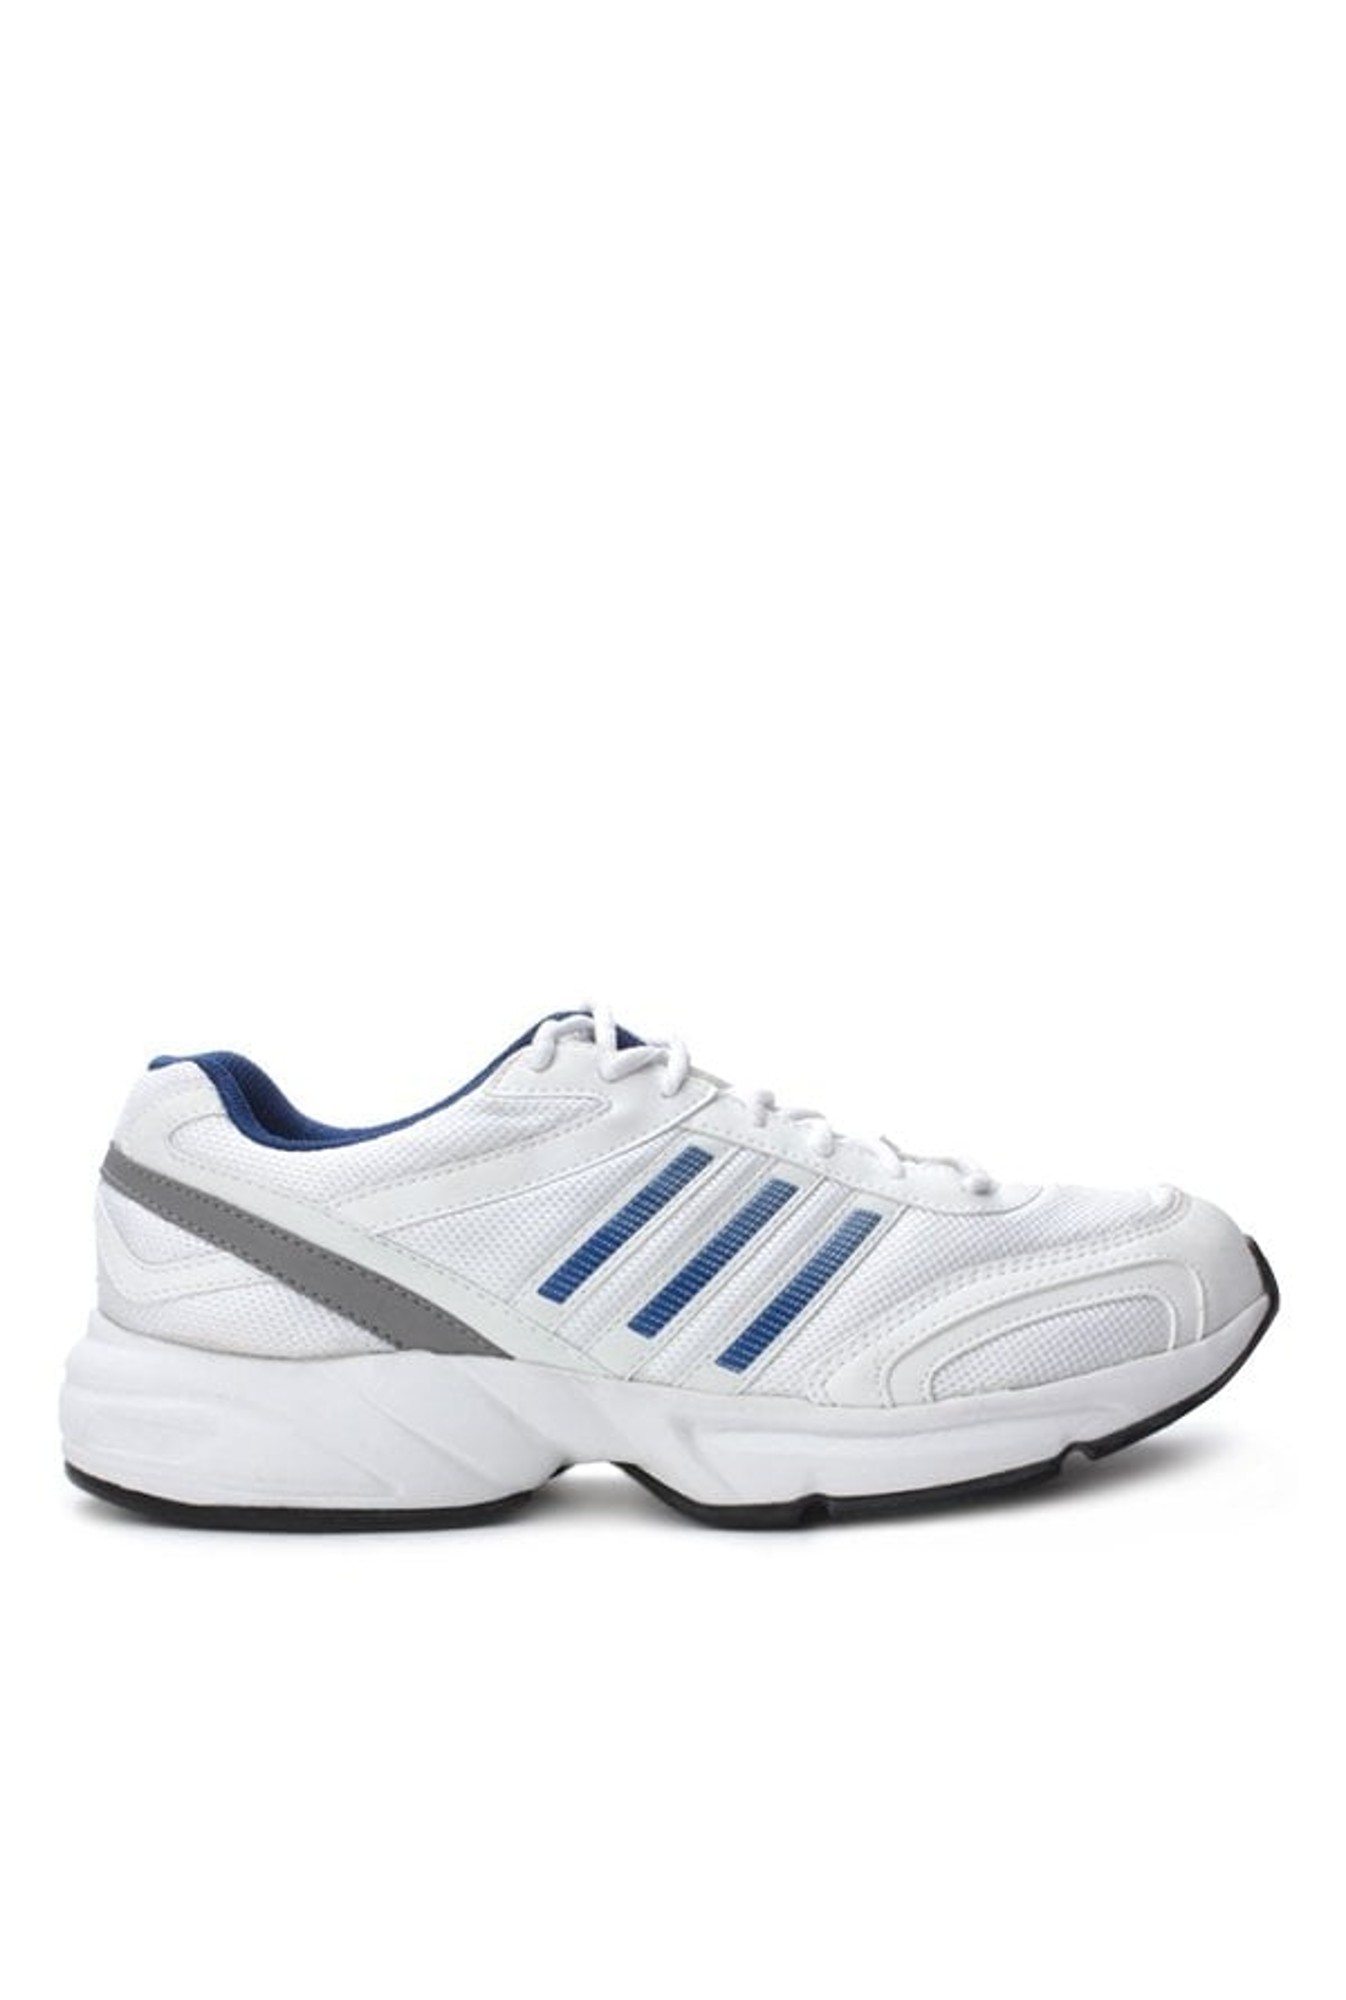 Buy Adidas Desma White Running Shoes 